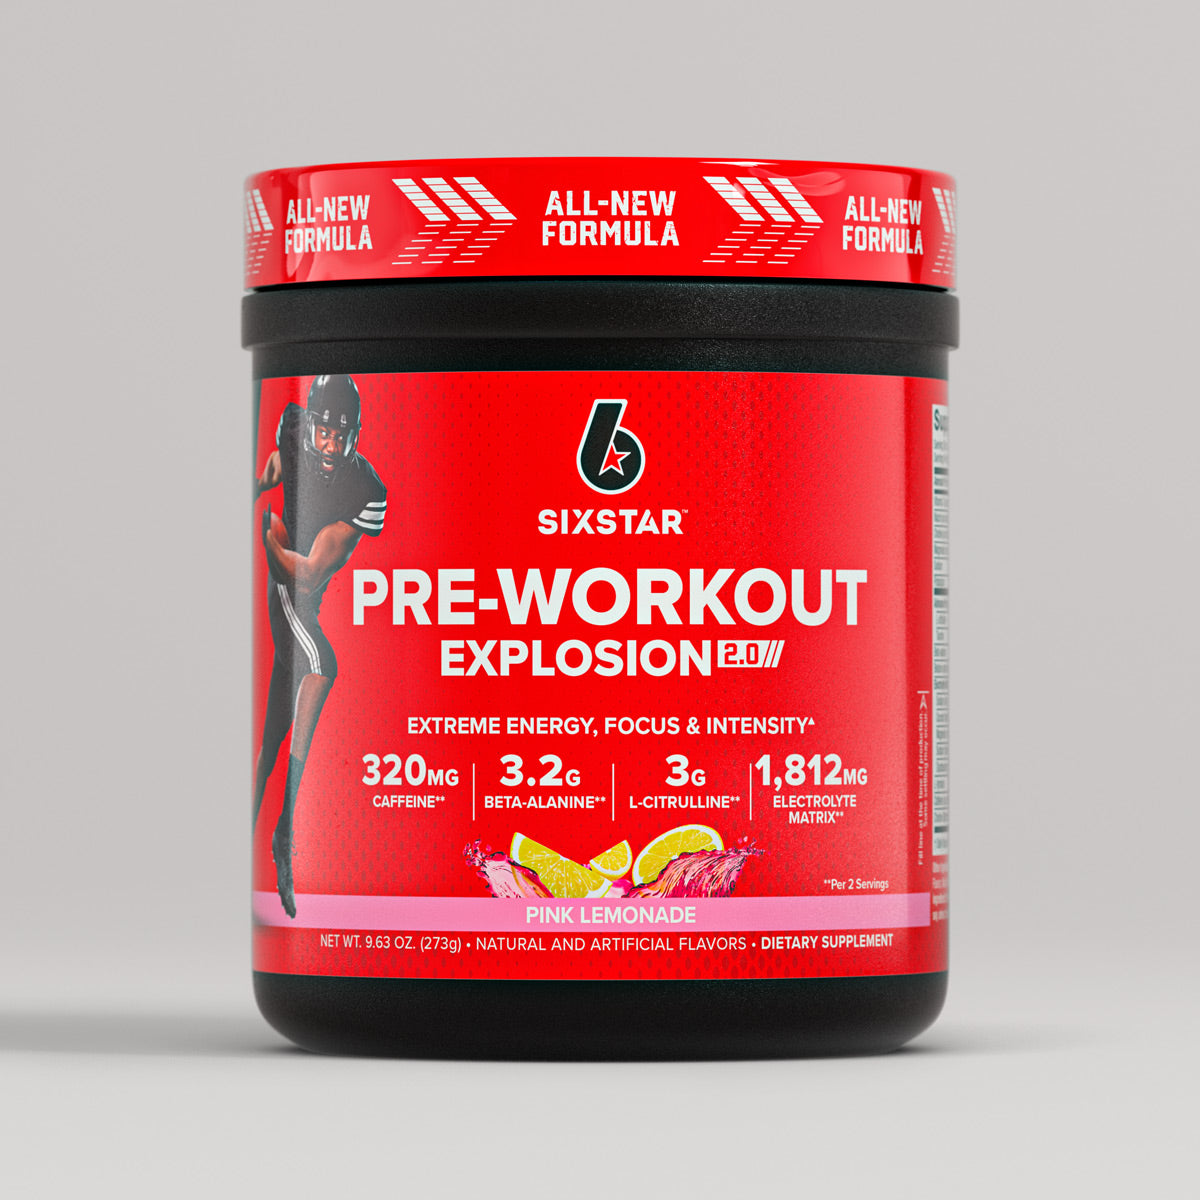 Pre-Workout Explosion 2.0 - Pink Lemonade